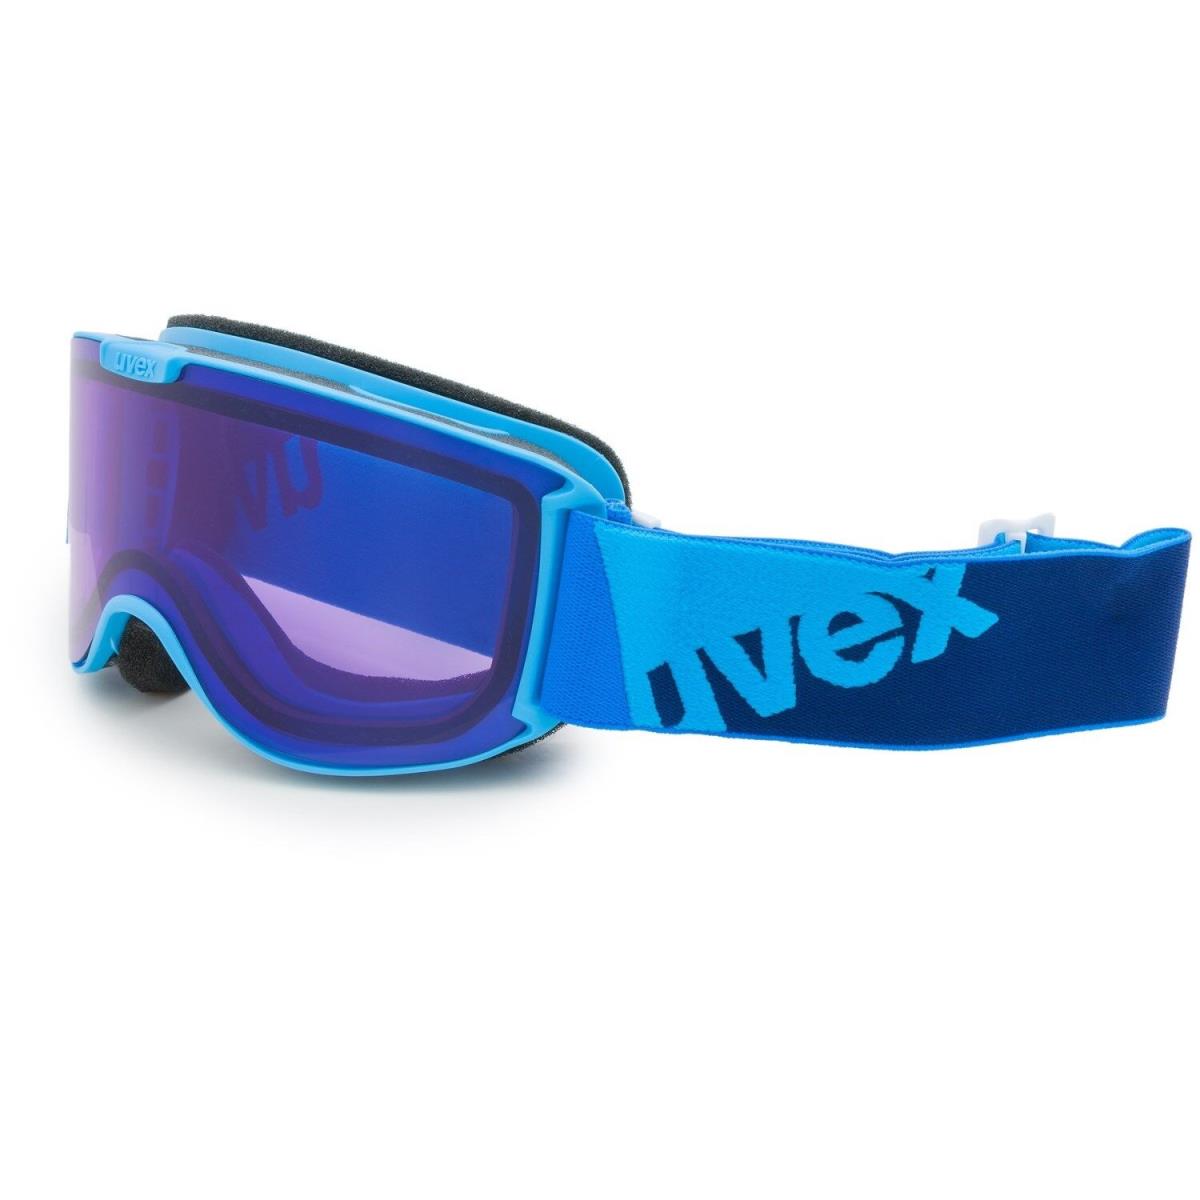 Uvex Skyper Stimu Lens Blue Goggles - - Women